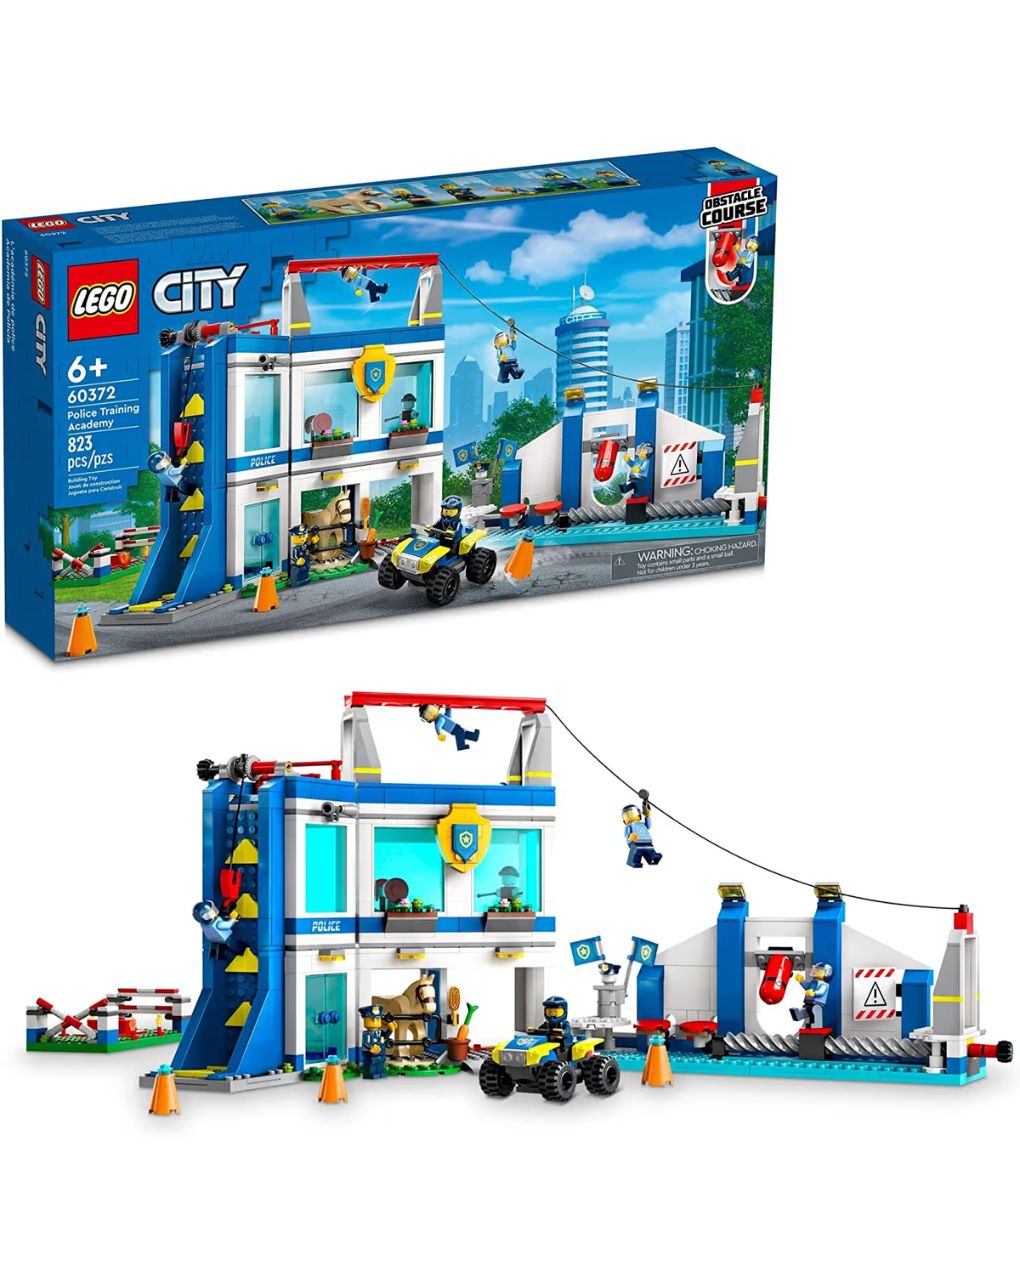 Lego city police training academy 60372 - Lego, Lego City